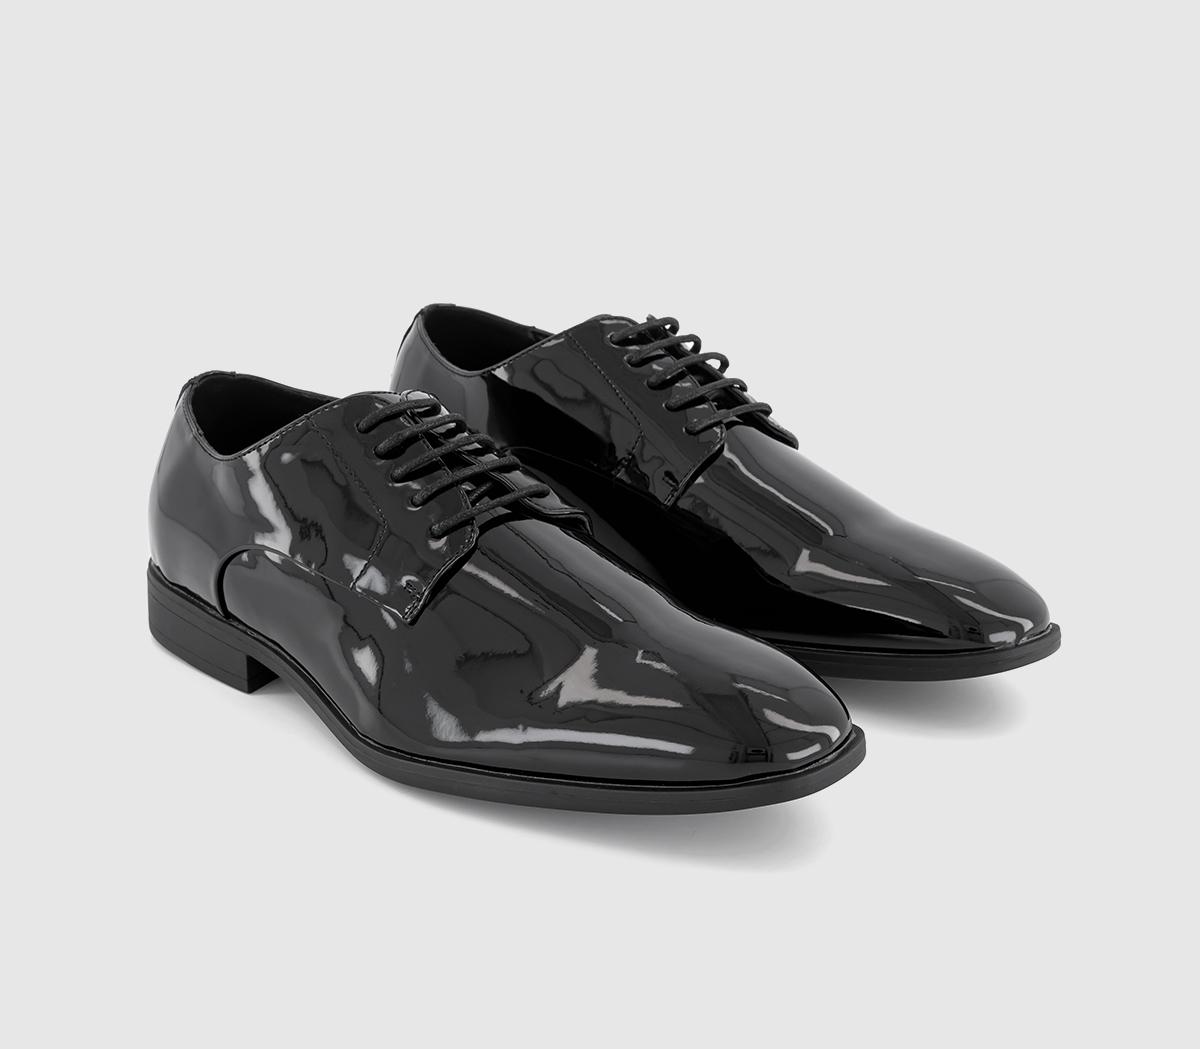 OFFICE Mens Moreland Patent Derby Shoes Black, 9